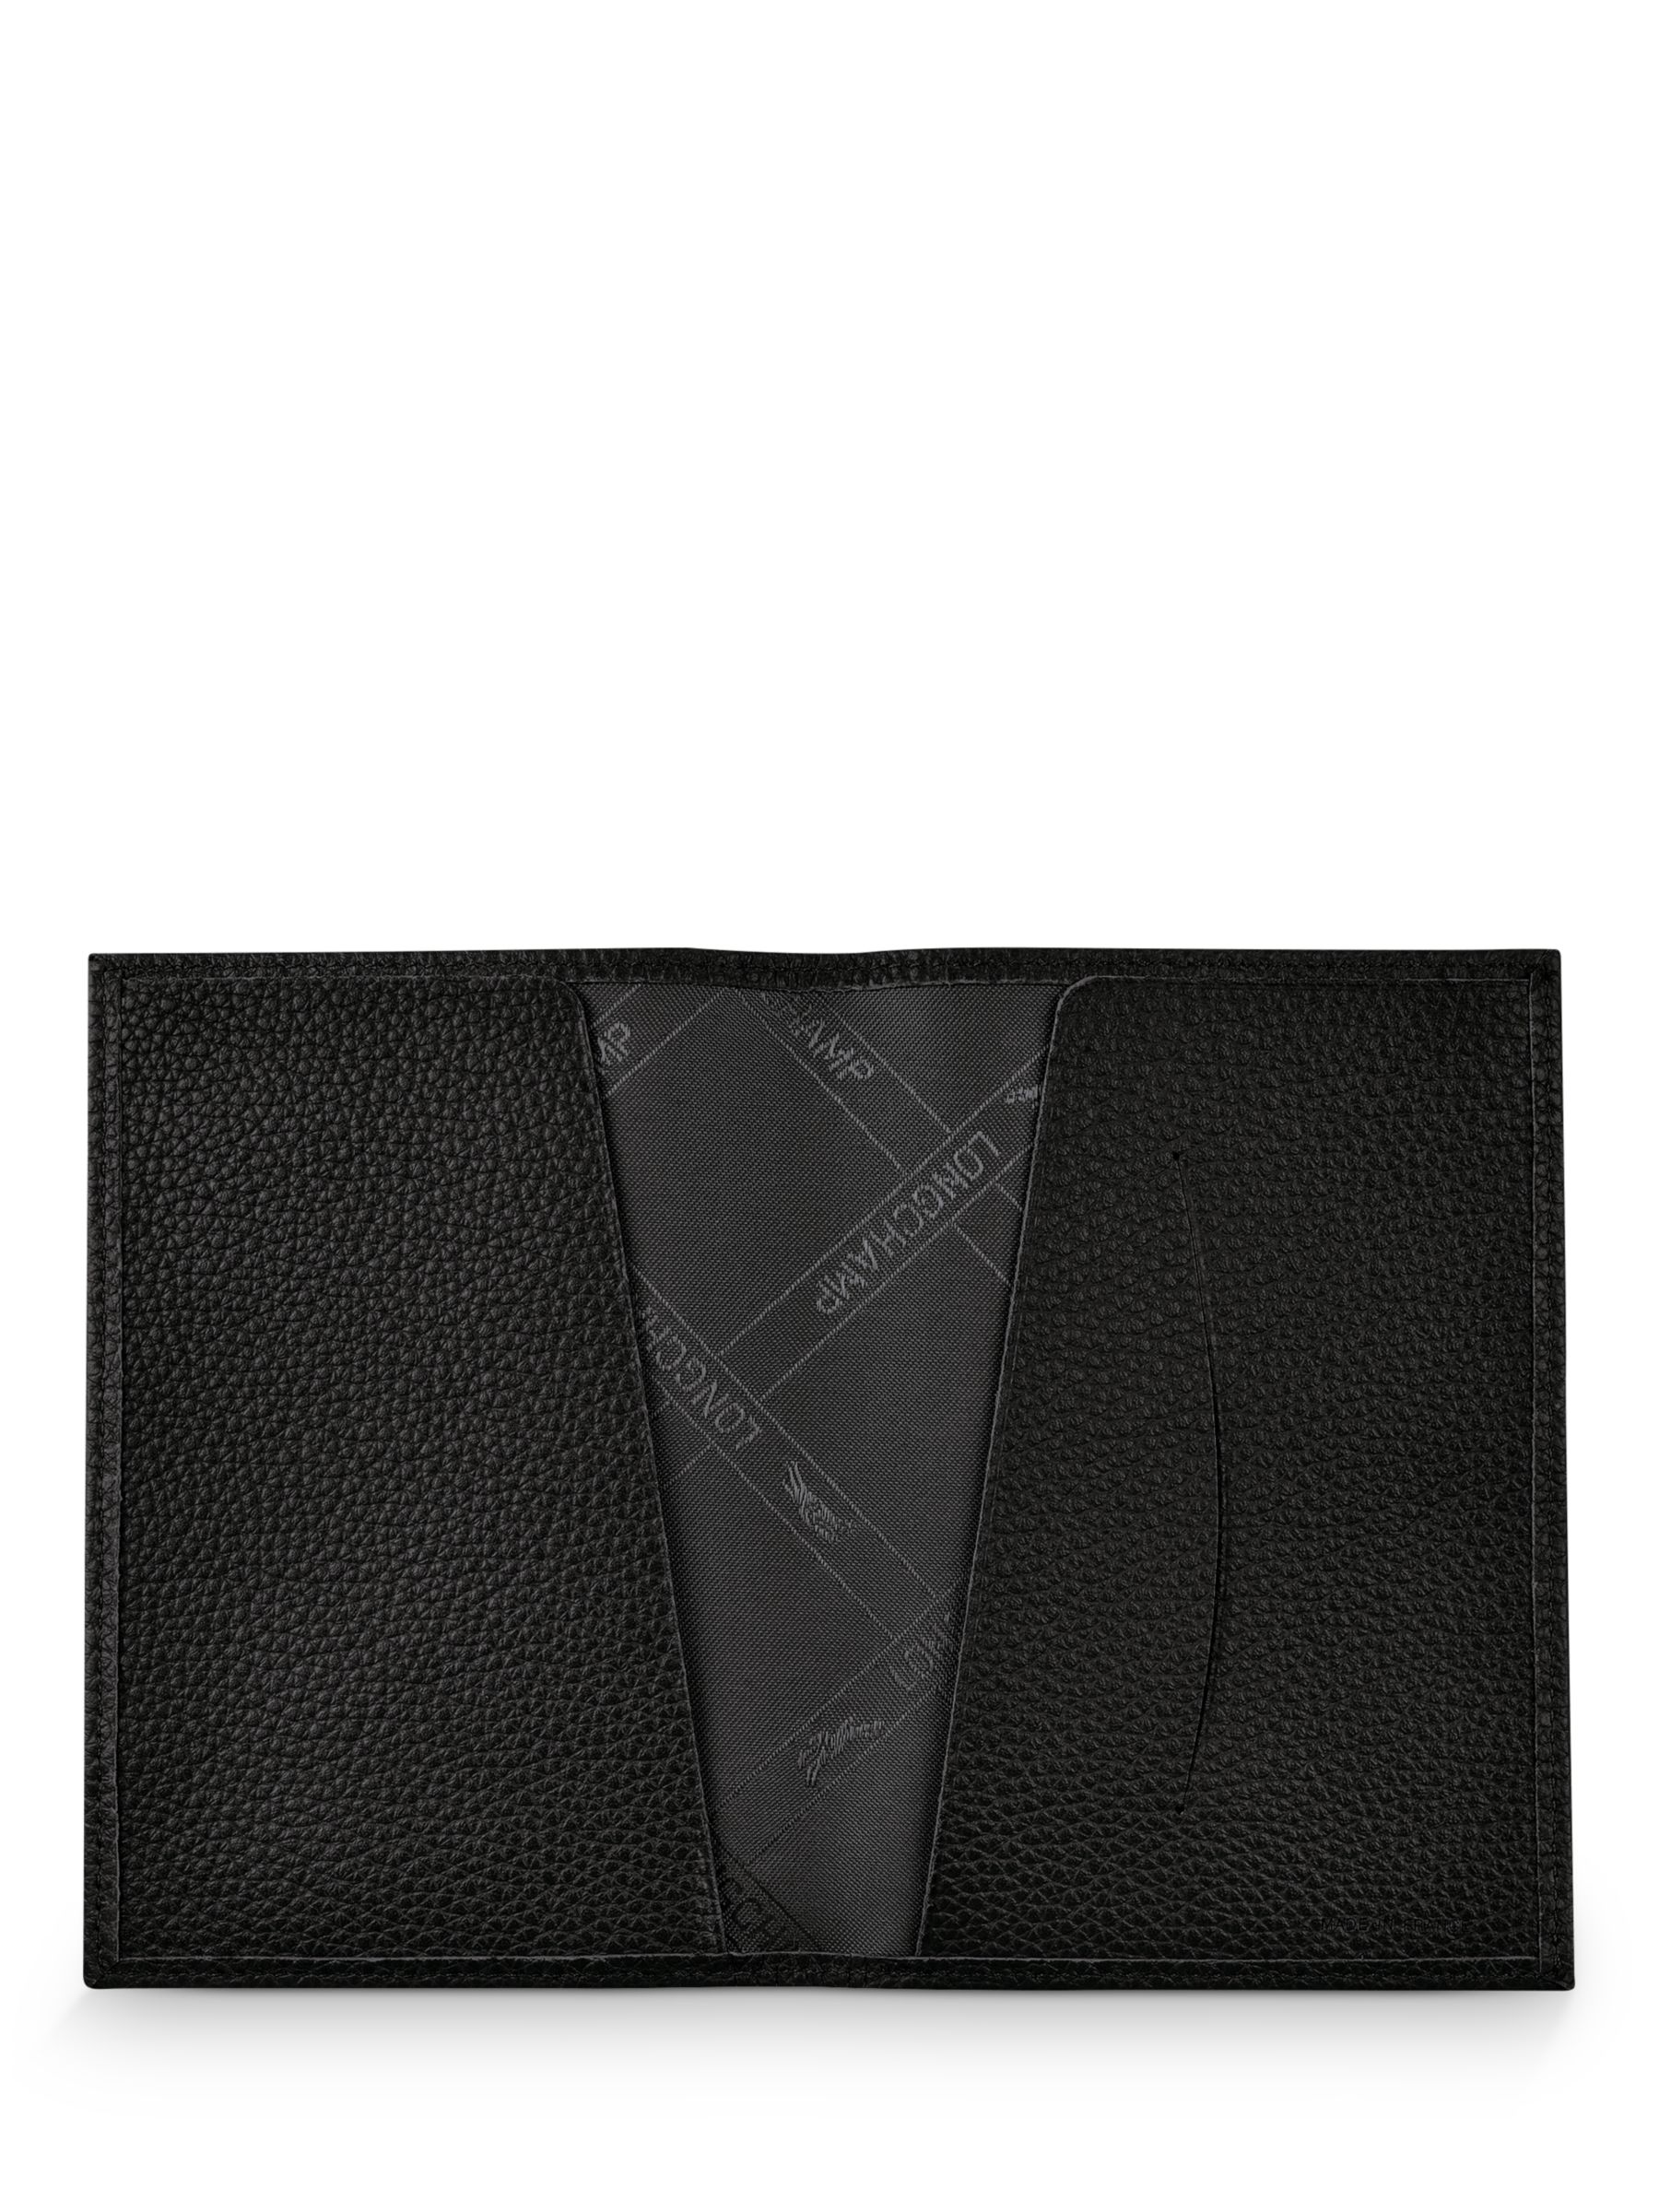 Longchamp Leather Passport Cover - Black Travel, Accessories - WL867082